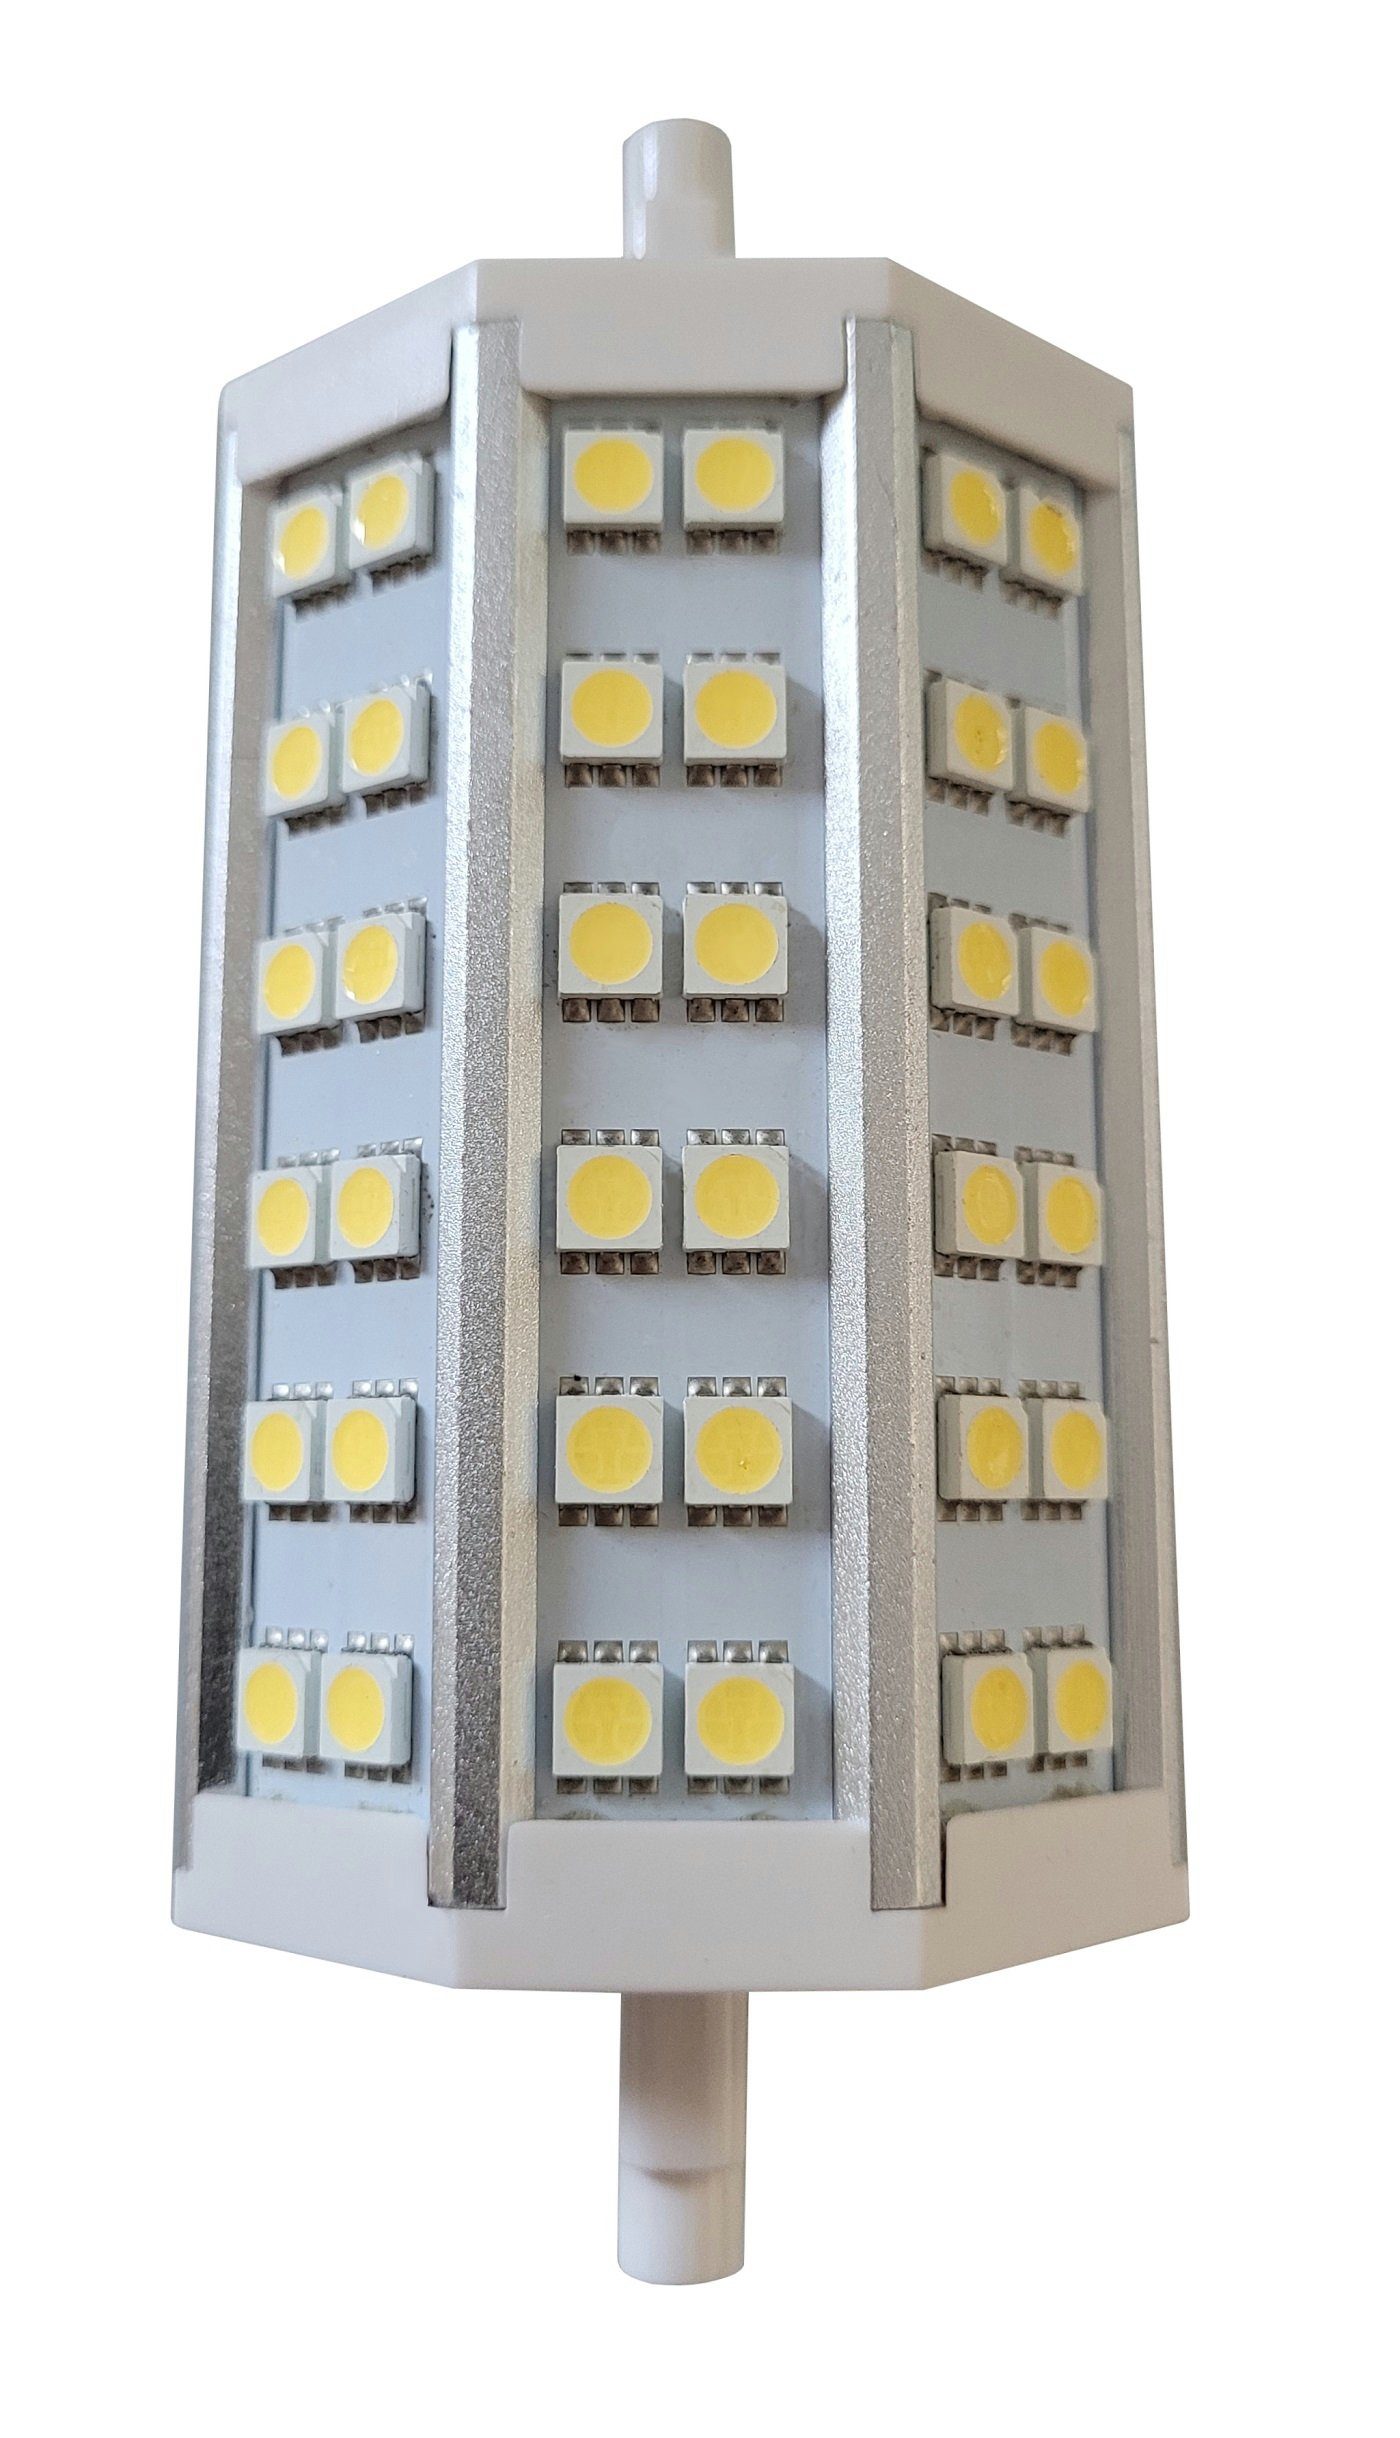 Provance LED-Leuchtmittel LED Stablampe J118 RX7S 8W 840 lm 6500 K 36 LEDs, R7s, warmweiß